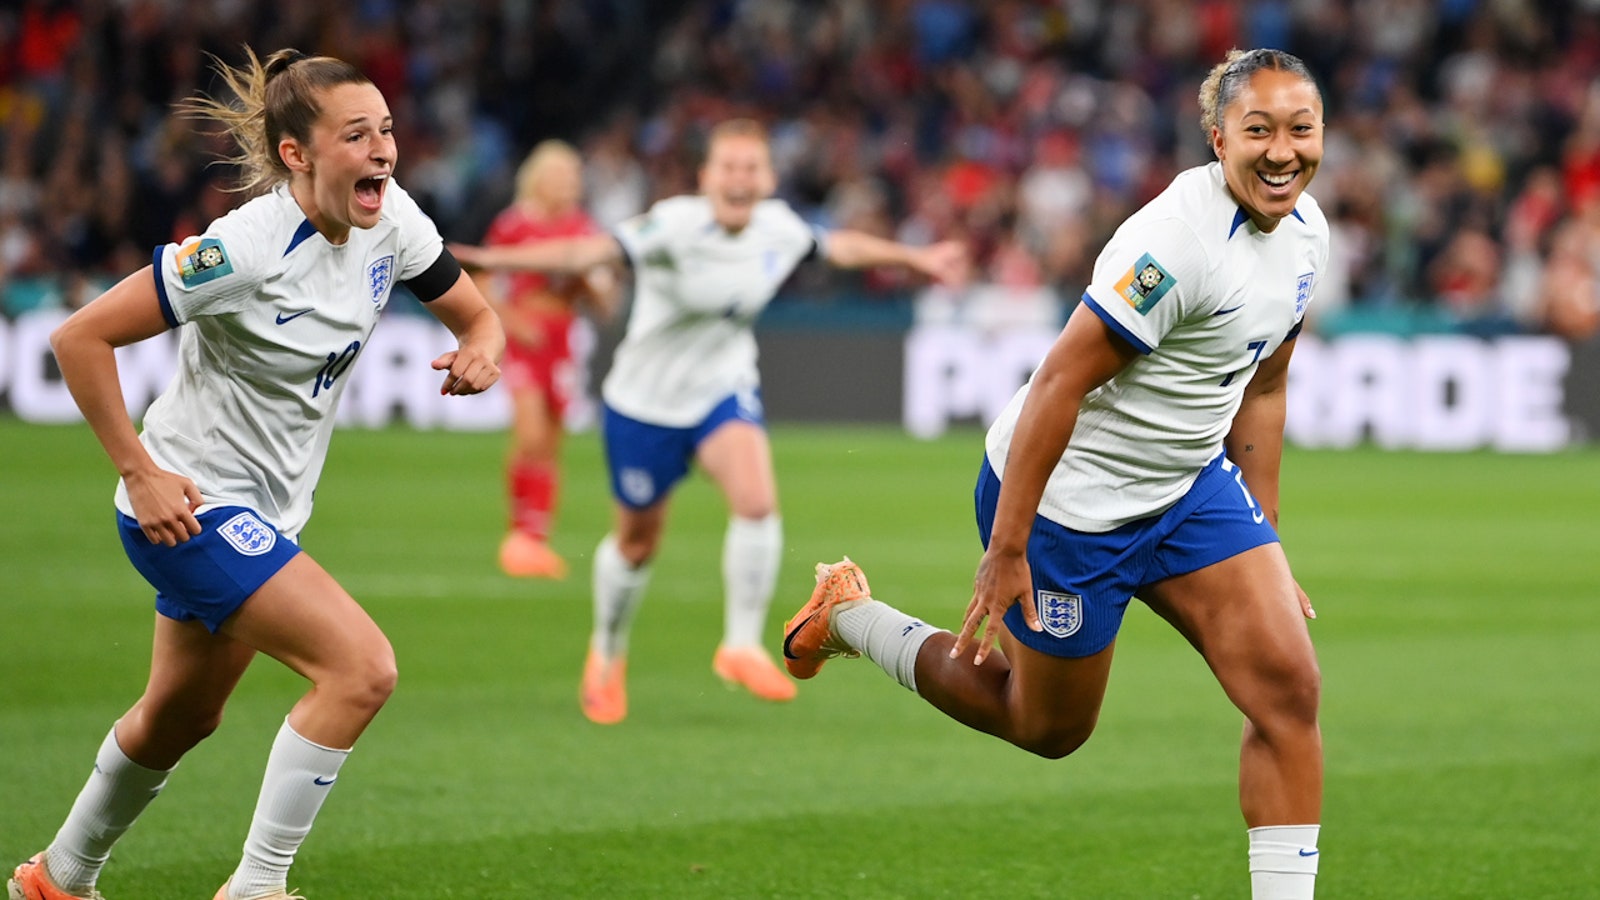 England's Lauren James scores goal vs. Denmark in 6' 